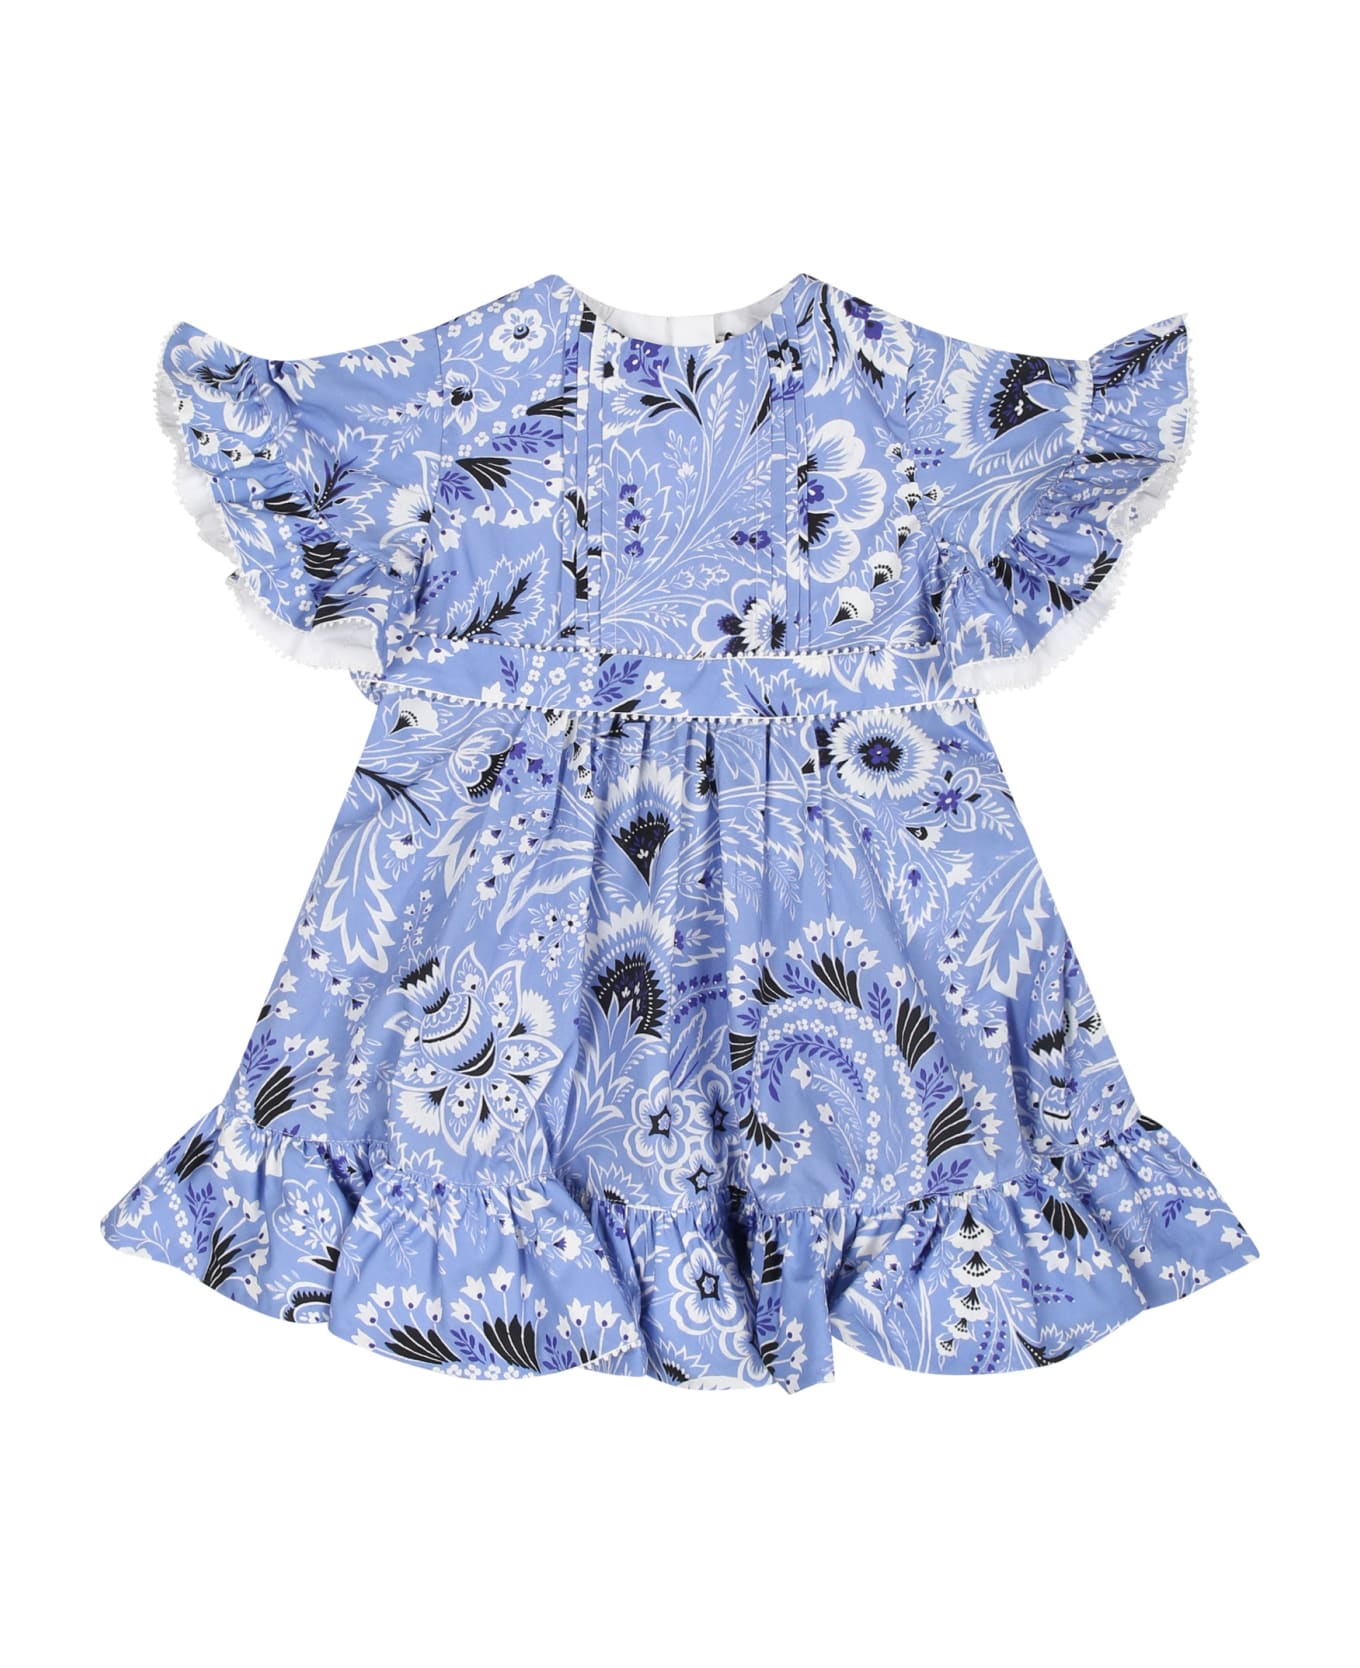 Etro Elegant Sky Blue Dress For Baby Girl With Paisley Pattern - Light Blue ウェア